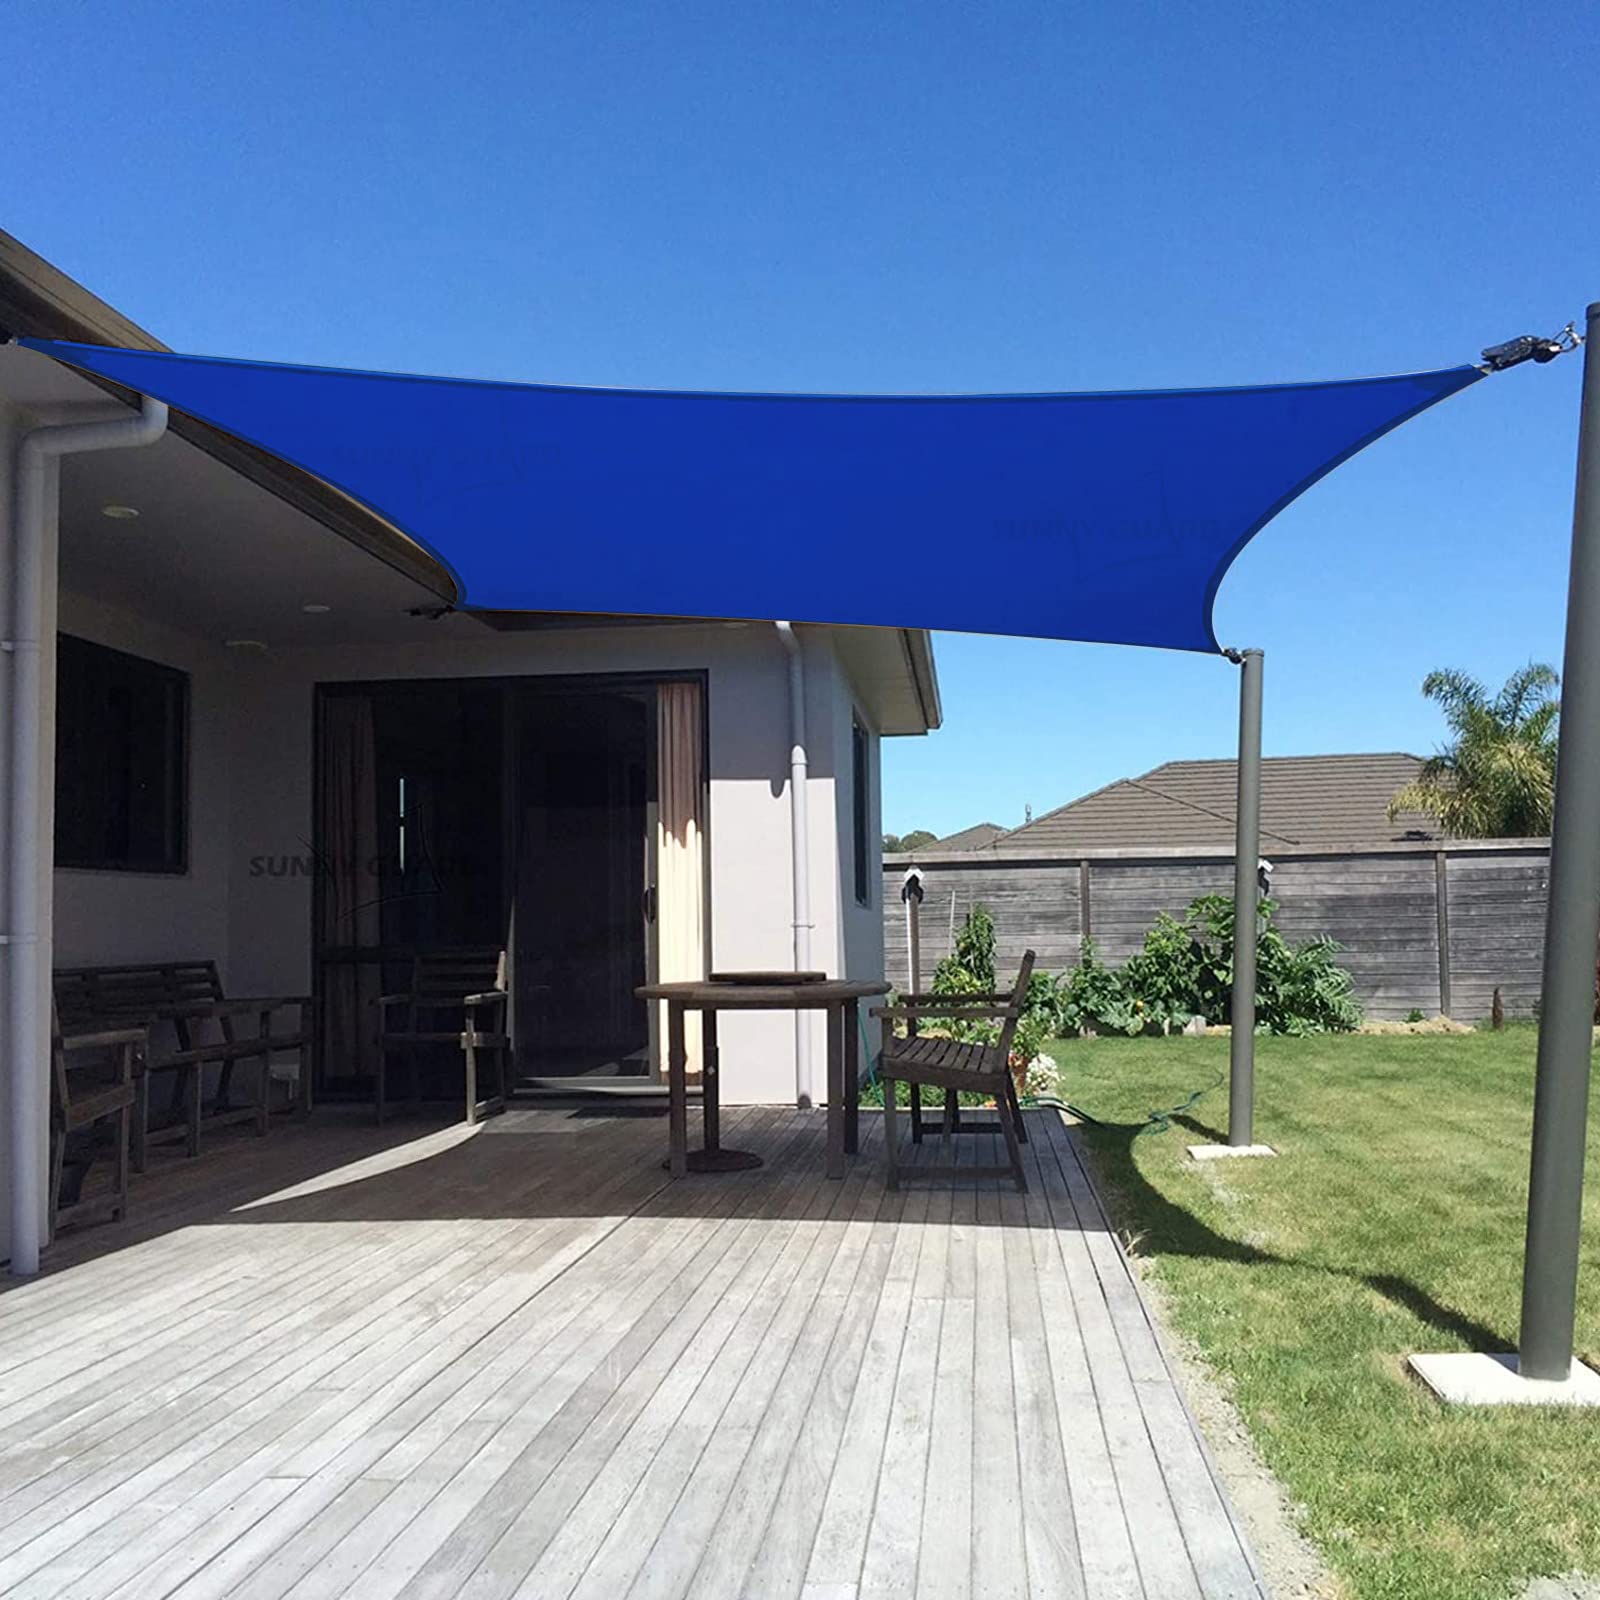 Breathable Square Shade Sail for Backyard Deck Patio Garden